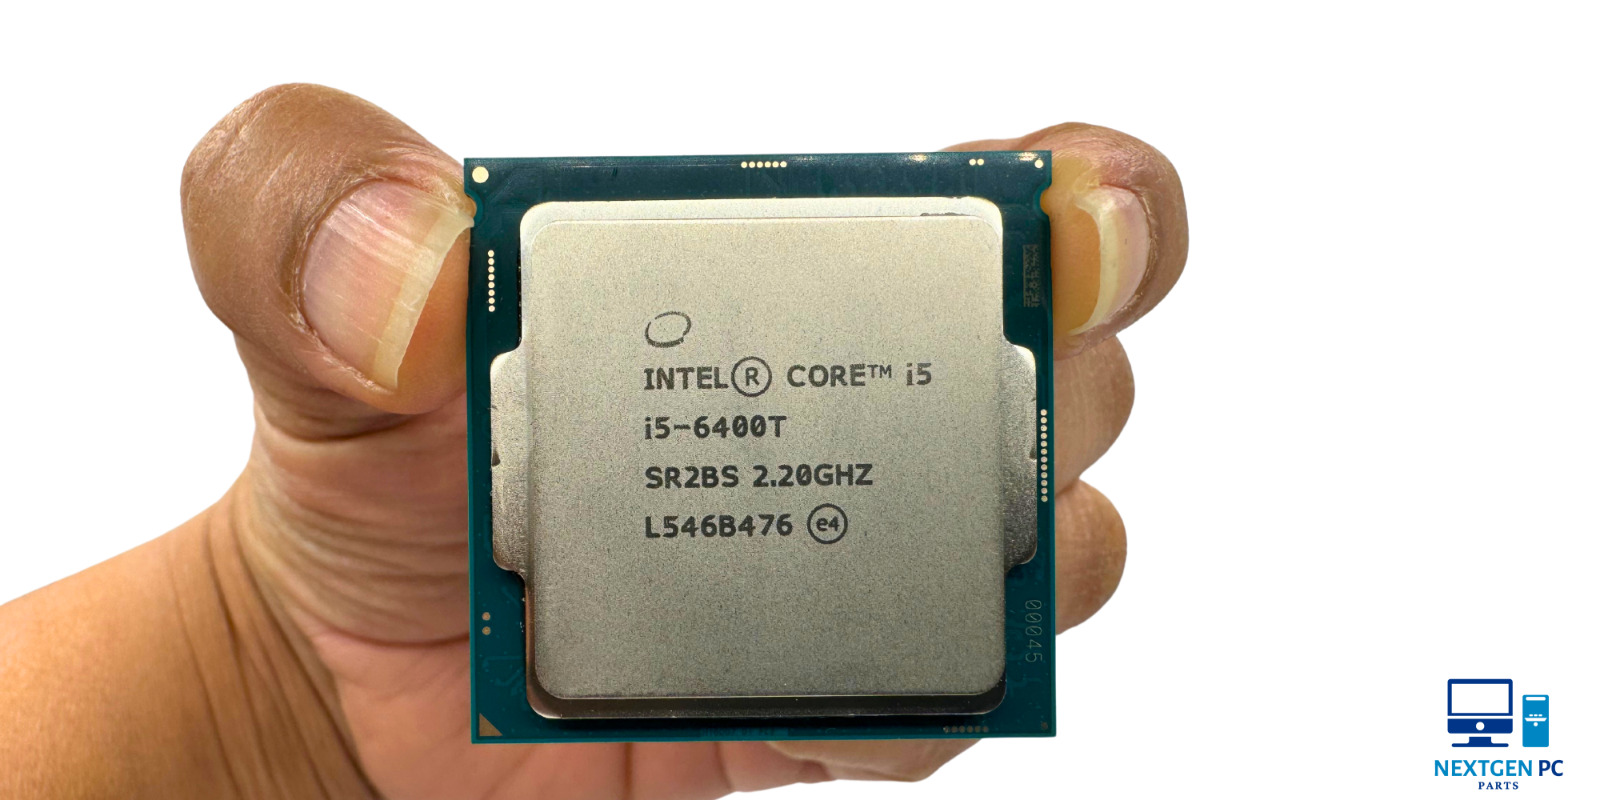 Intel Core i5-6400T SR2BS Quad-Core 2.2GHZ 1151 CPU Processor - Tested